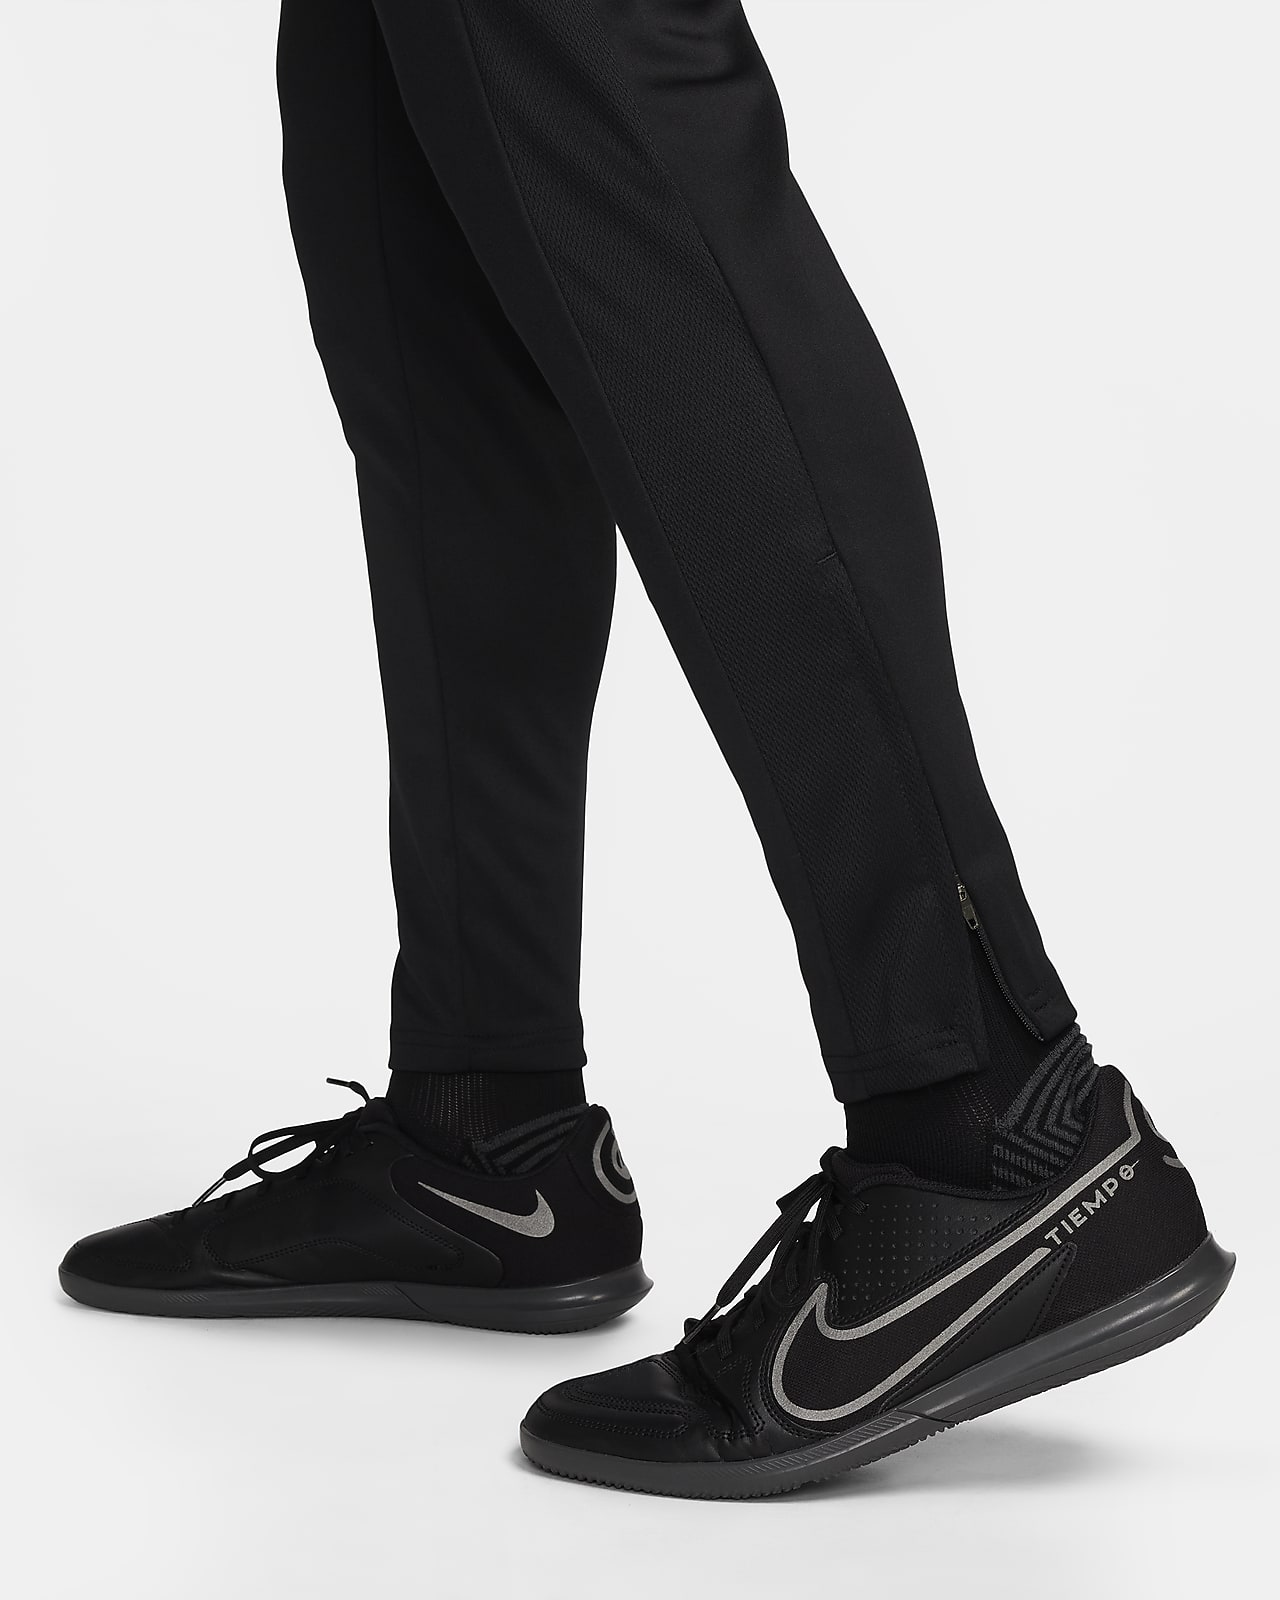 Nike Academy Dri-Fit pants in black